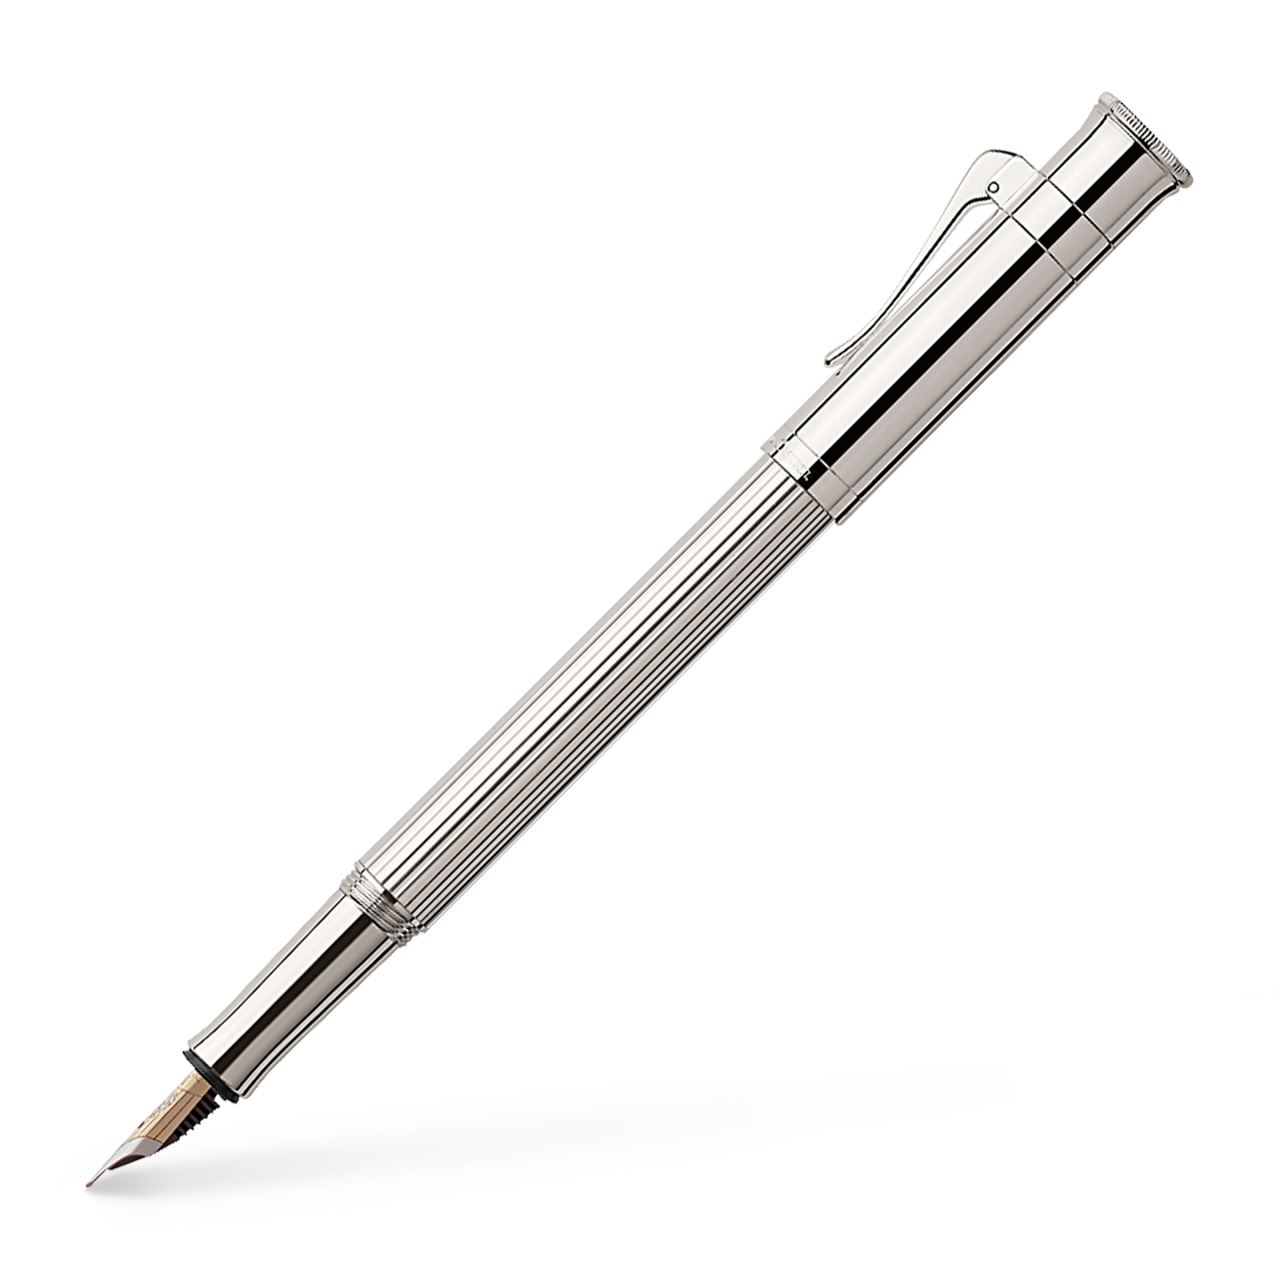 Graf-von-Faber-Castell - Fountain pen Classic platinum-plated B